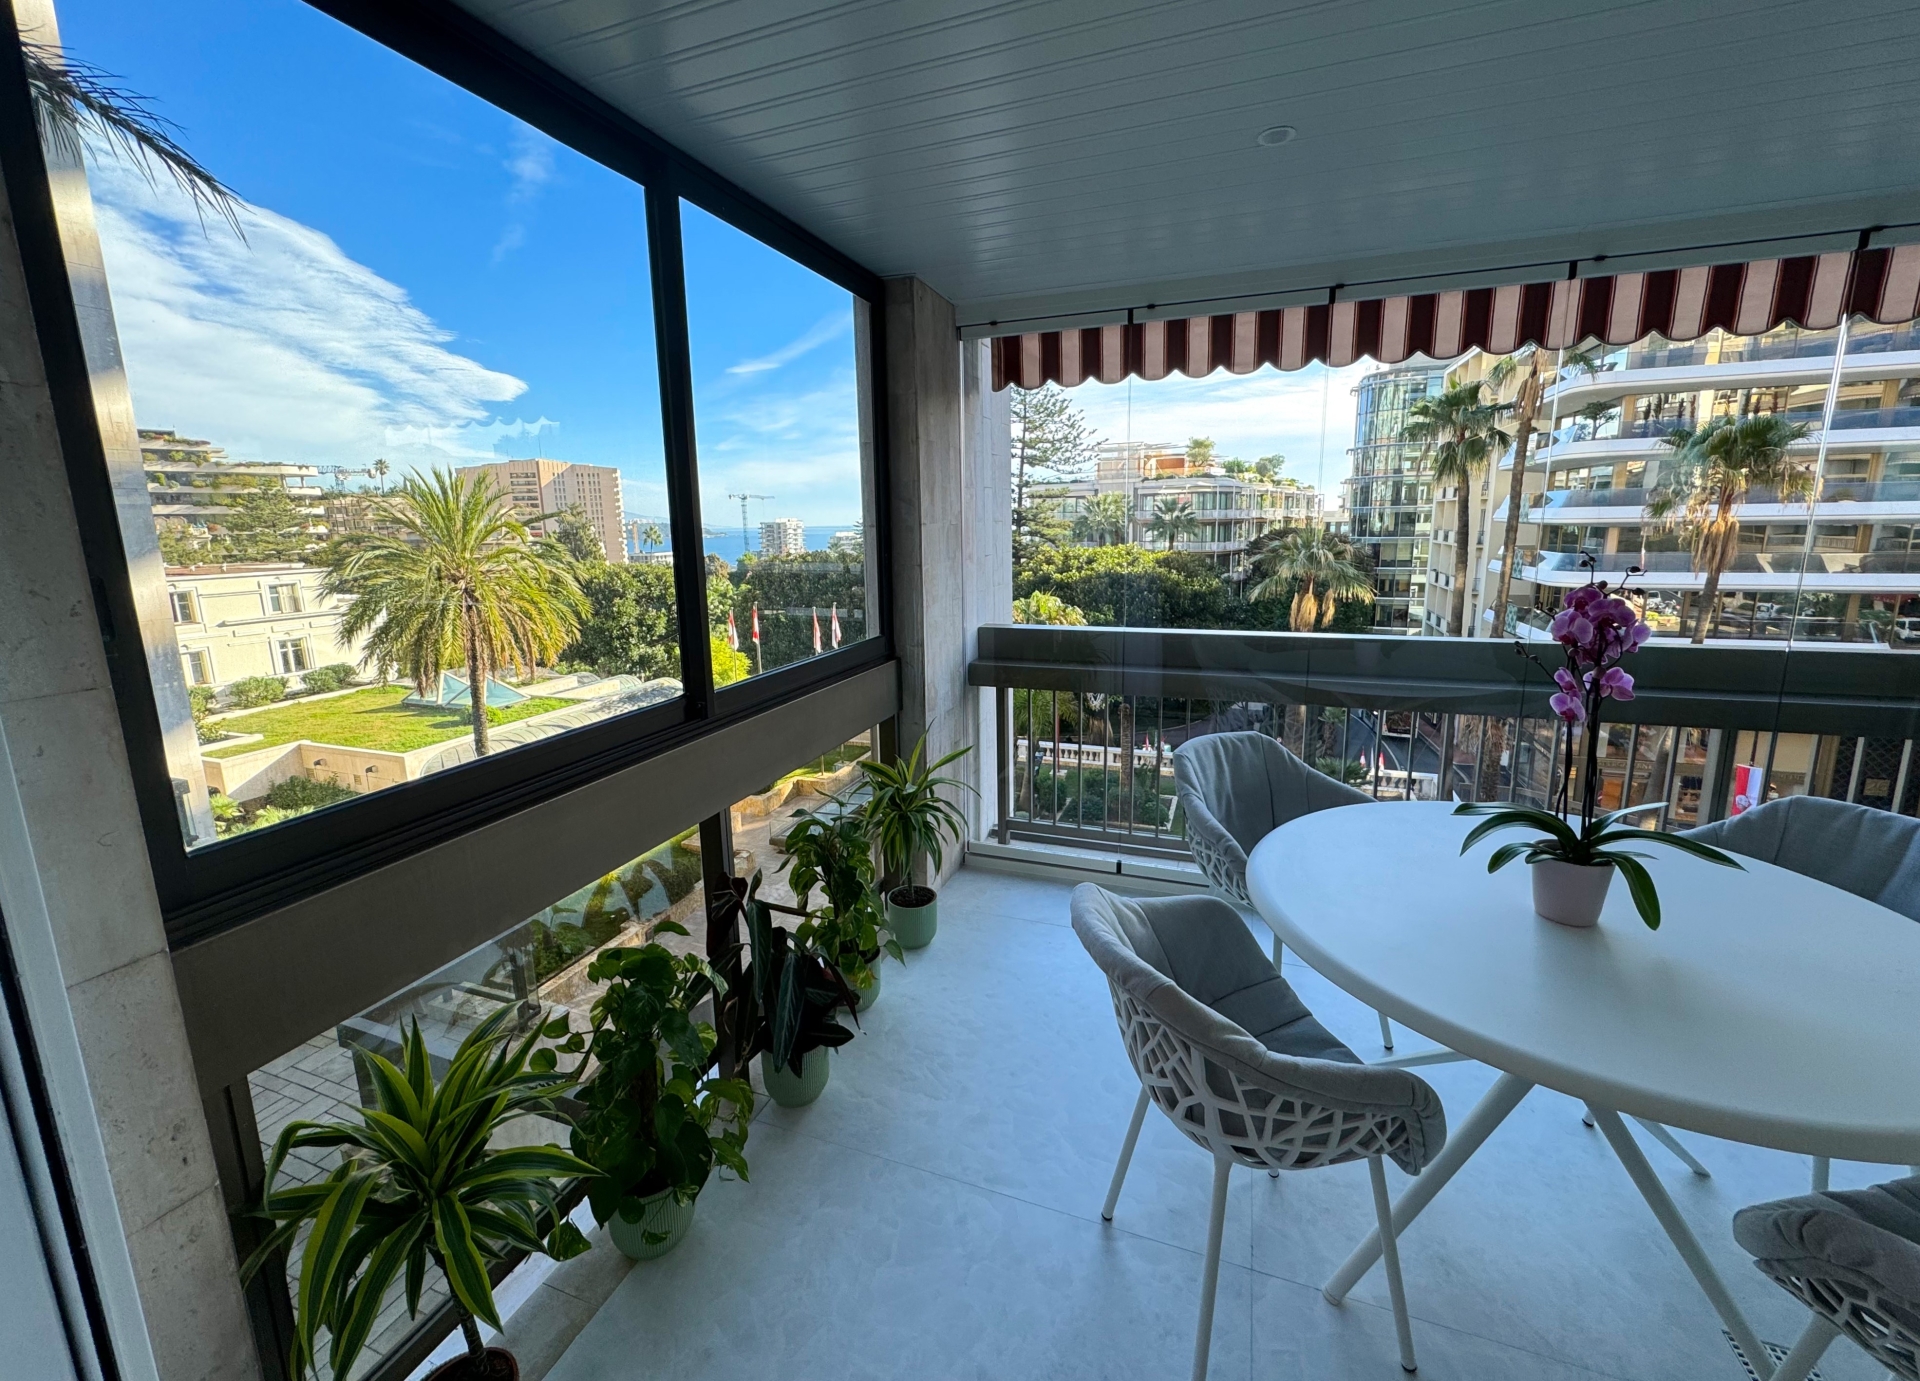 Dotta 2 rooms apartment for sale - PARK PALACE - Monte-Carlo - Monaco - img1